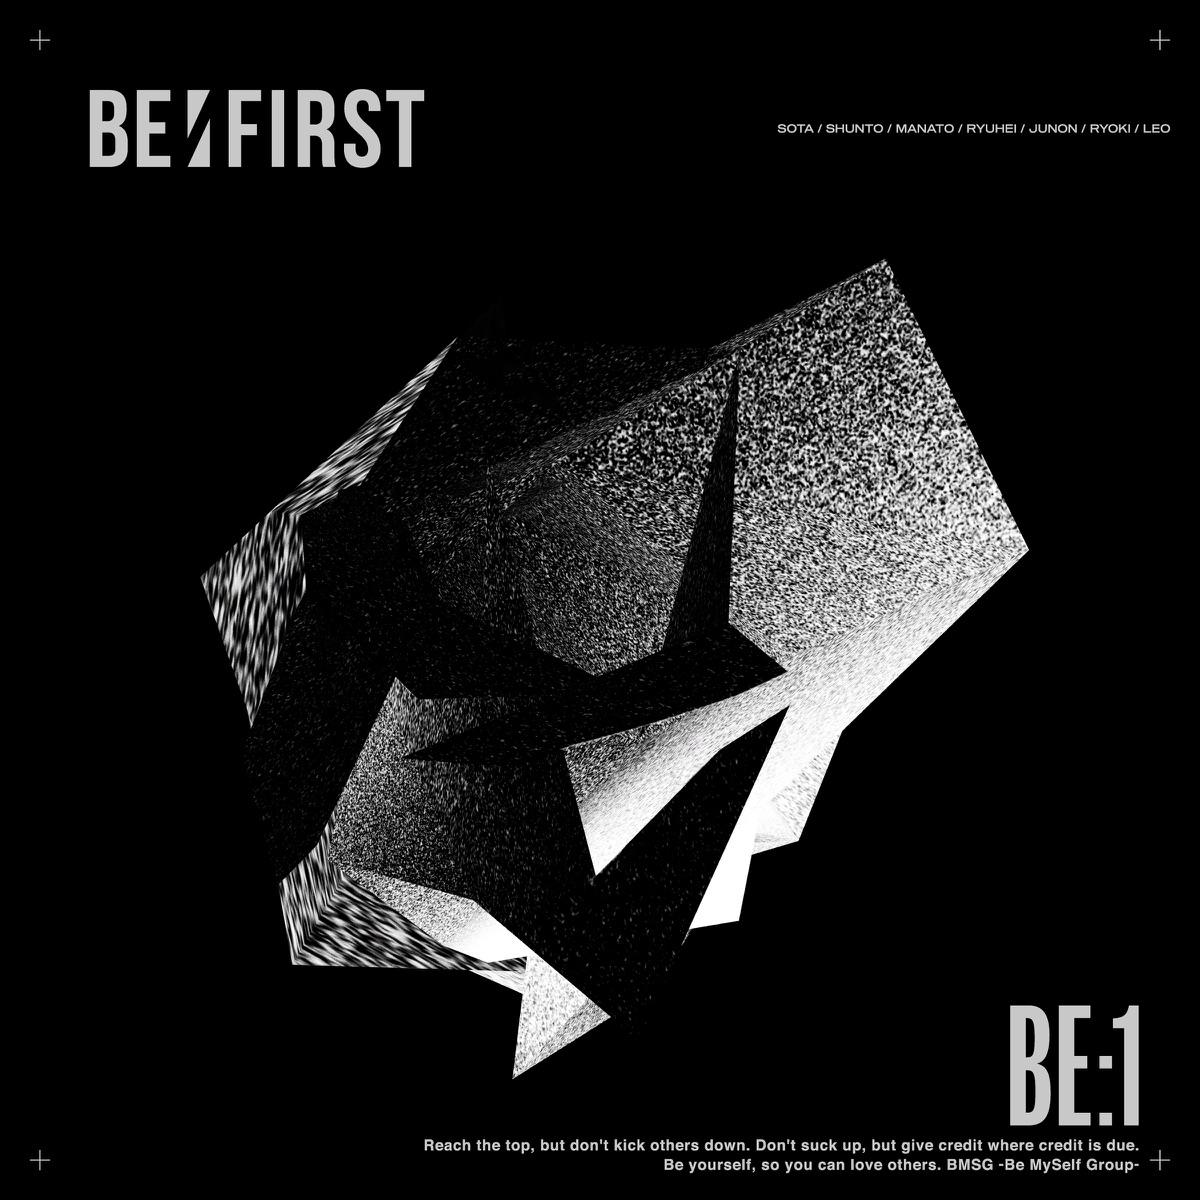 『BE:FIRST - Milli-Billi』収録の『BE:1』ジャケット